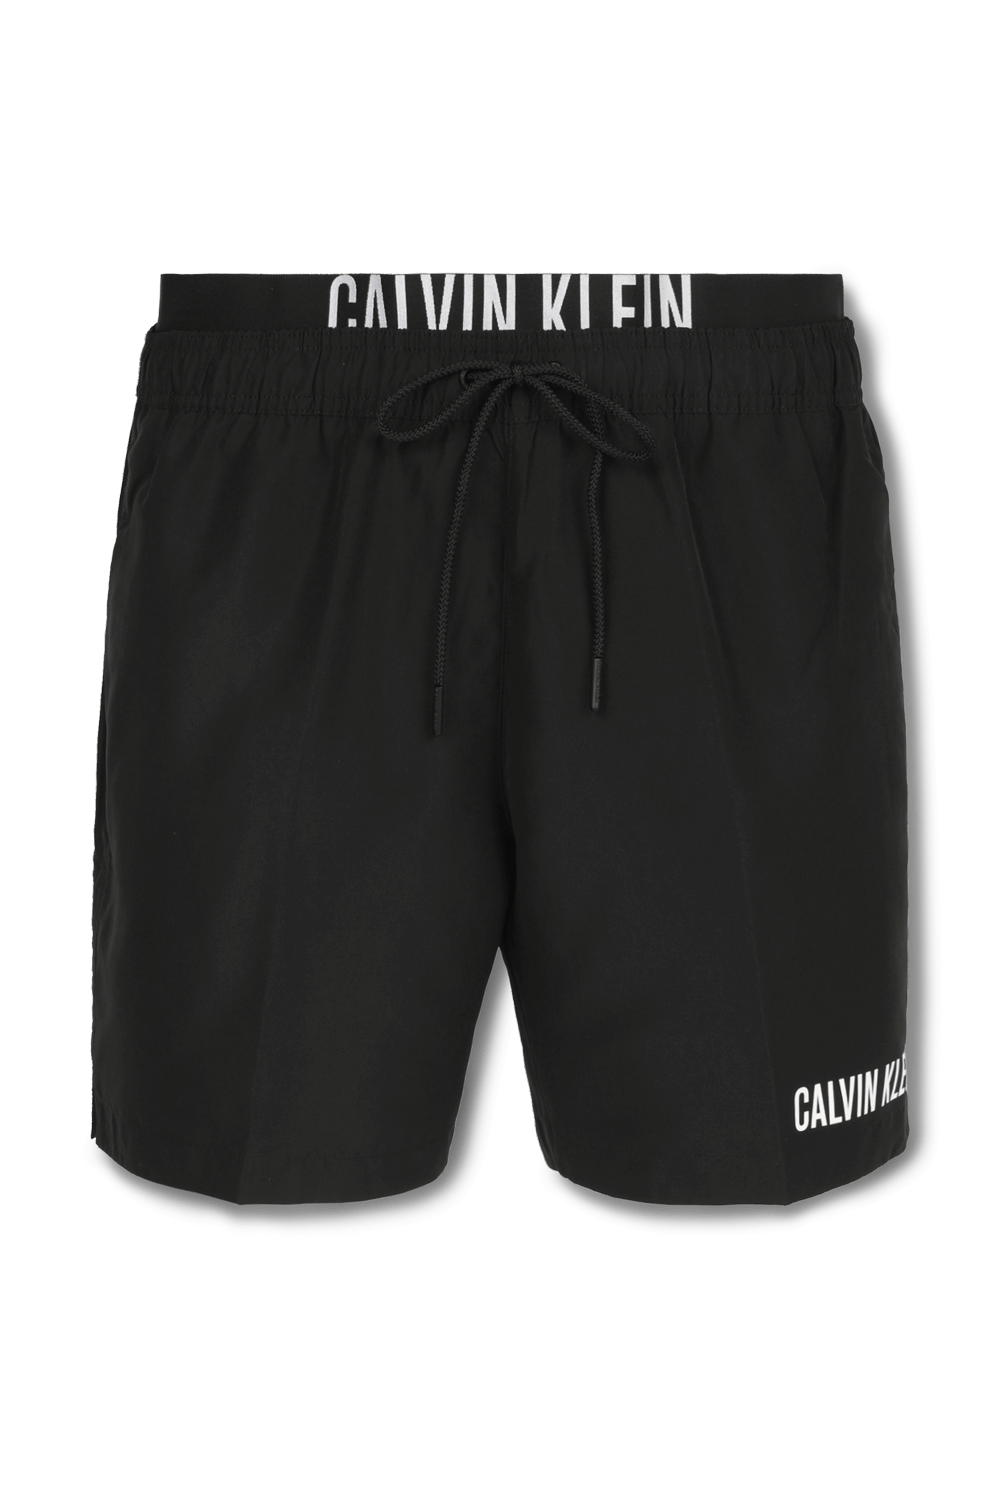 Double Waistband Swim Shorts in Black CALVIN KLEIN